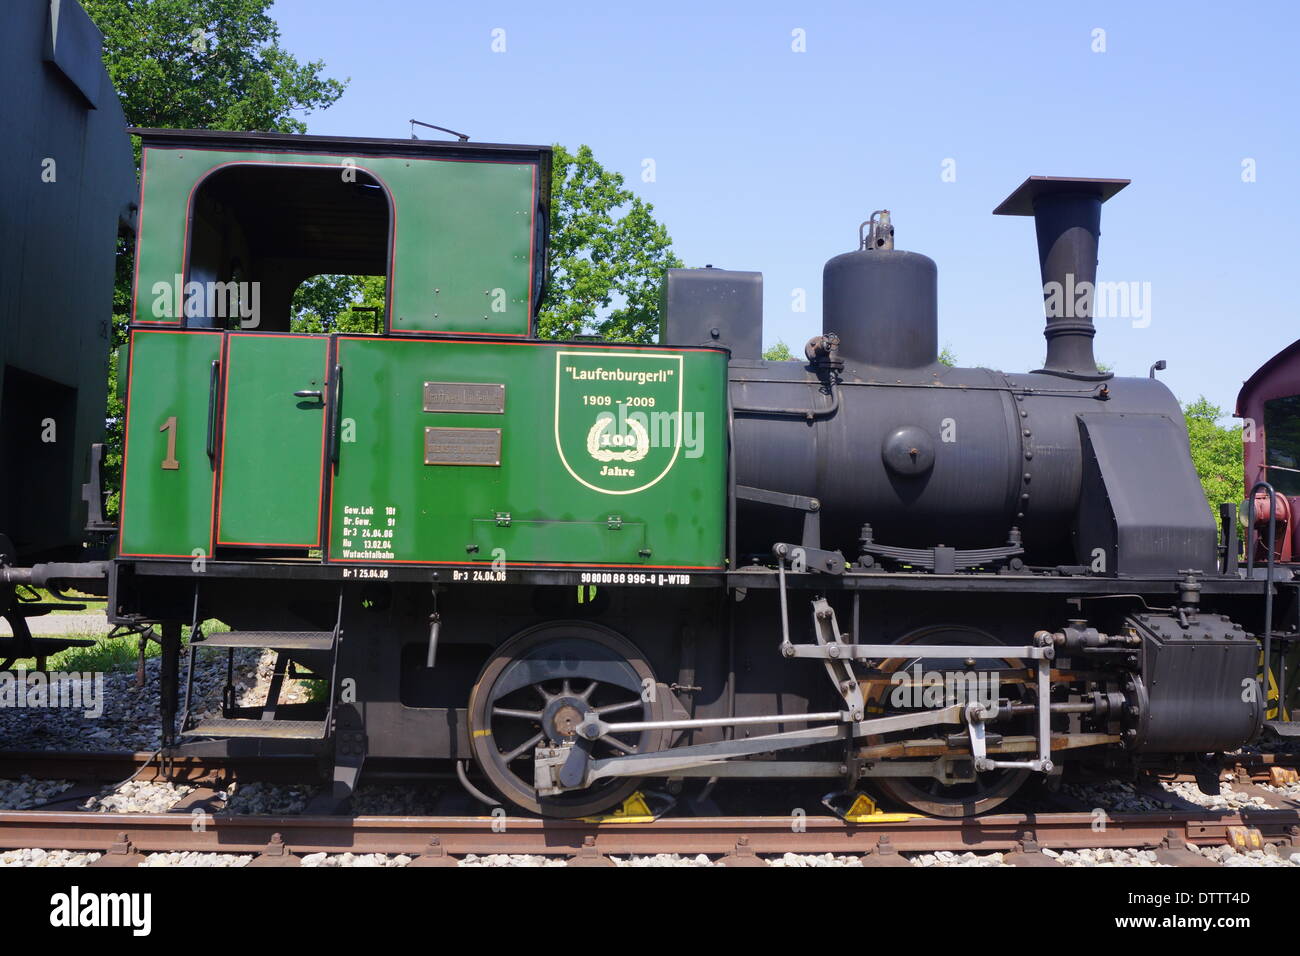 steamlocomotive laufenburgerli Stock Photo